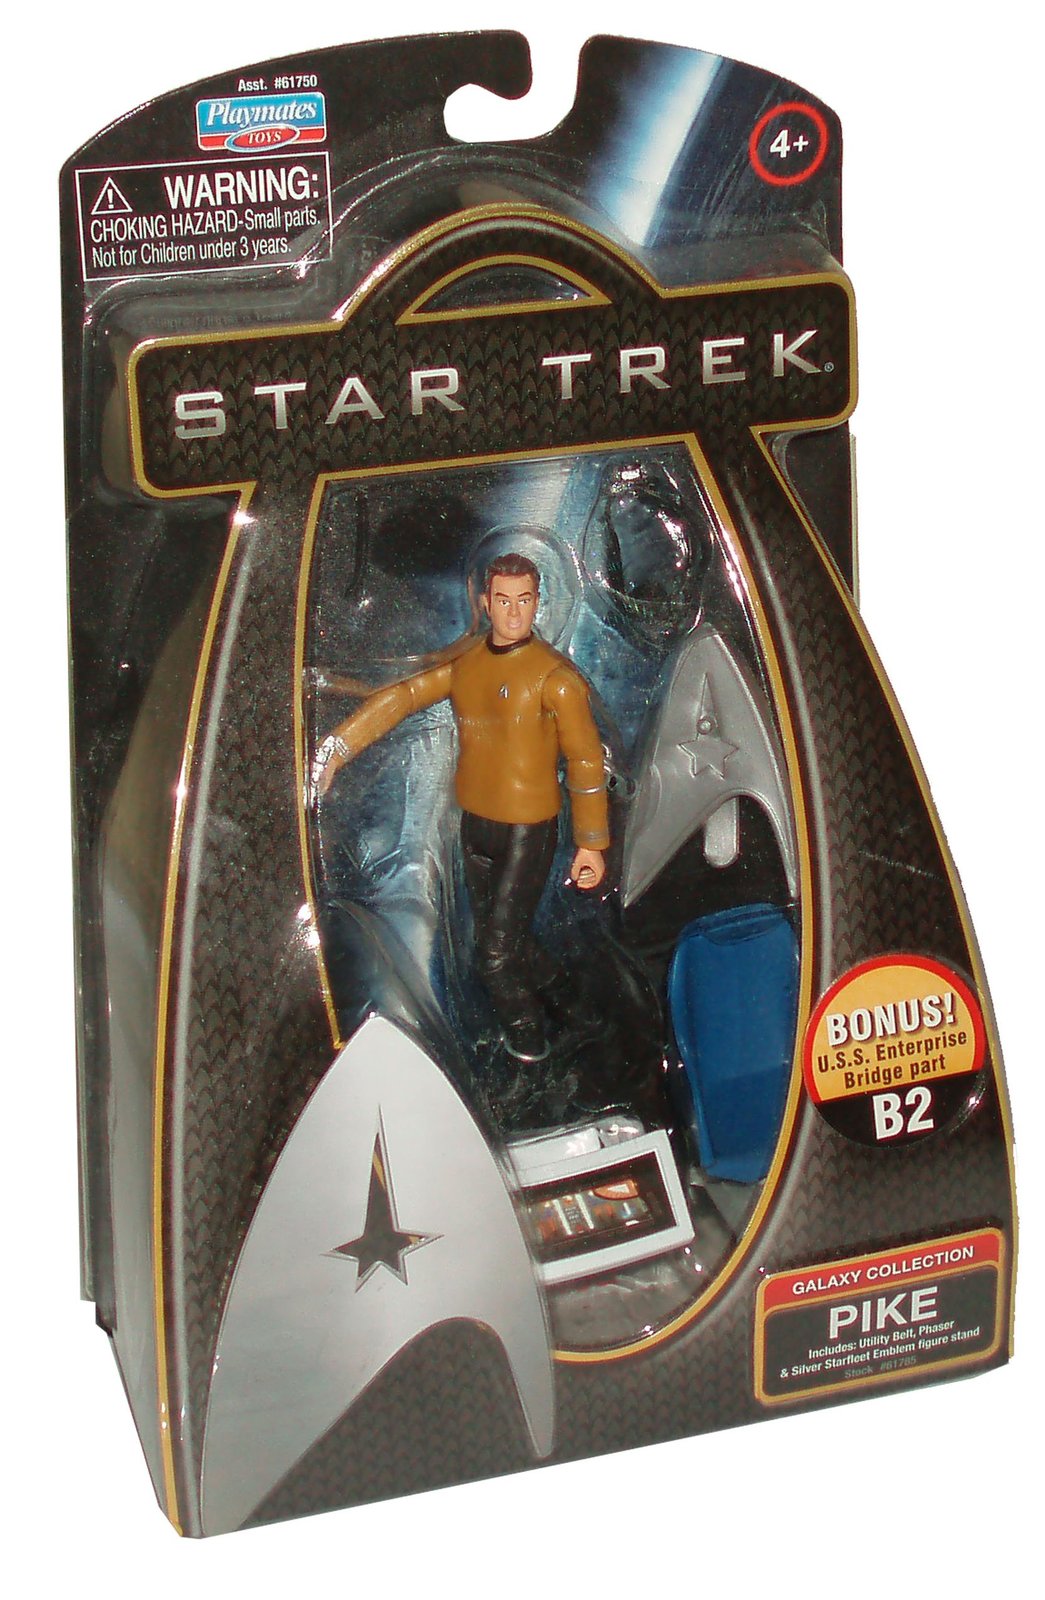 Playmates Toys Star Trek Starfleet Academy Cadet Worf Action Figure MOC for sale online